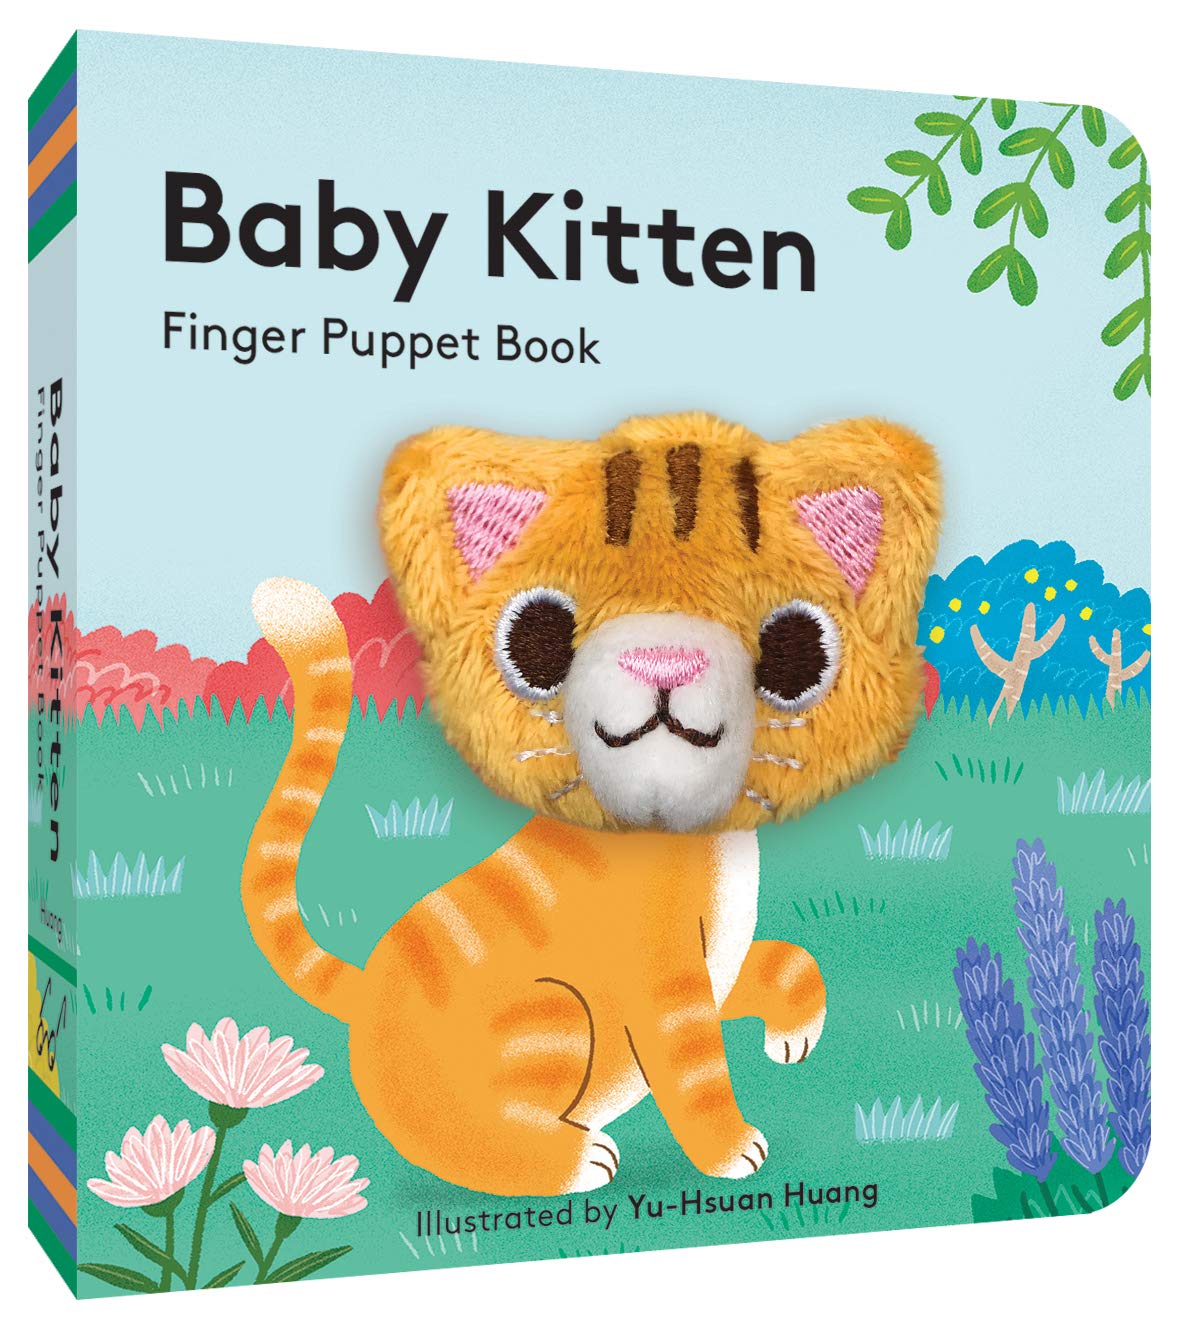 "Baby Kitten" Finger Puppet Book